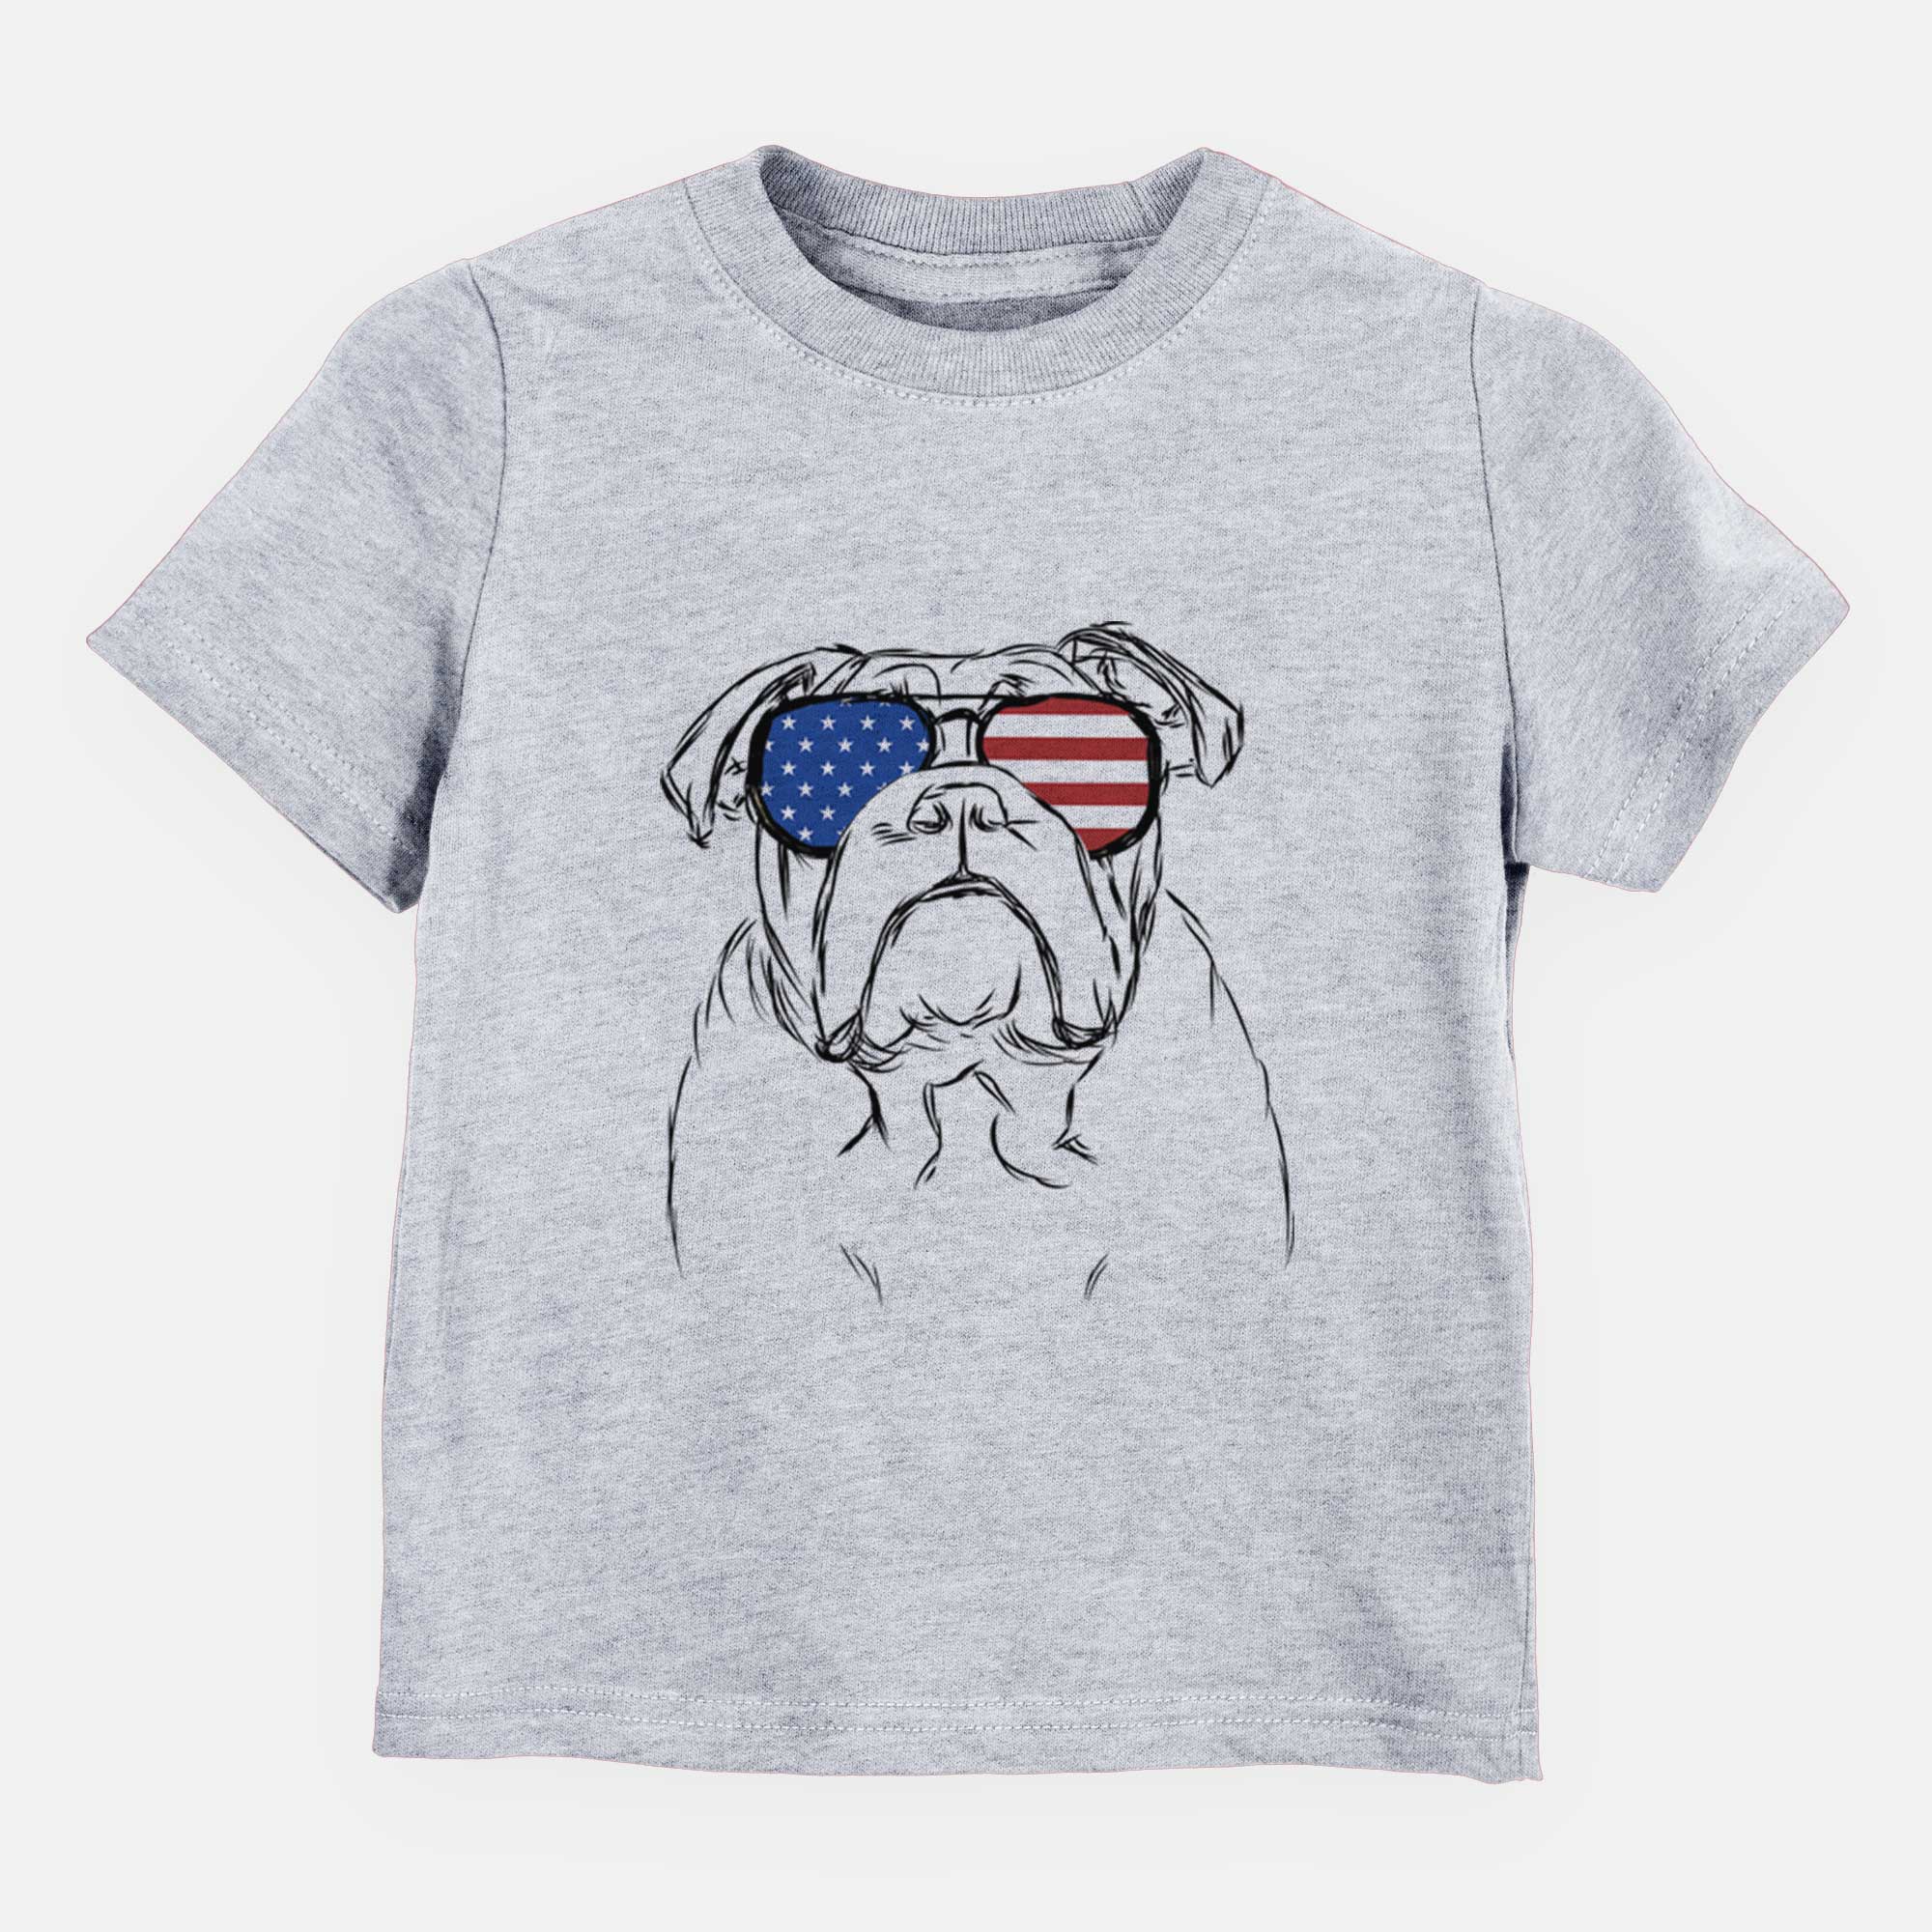 USA Winston the English Bulldog - Kids/Youth/Toddler Shirt